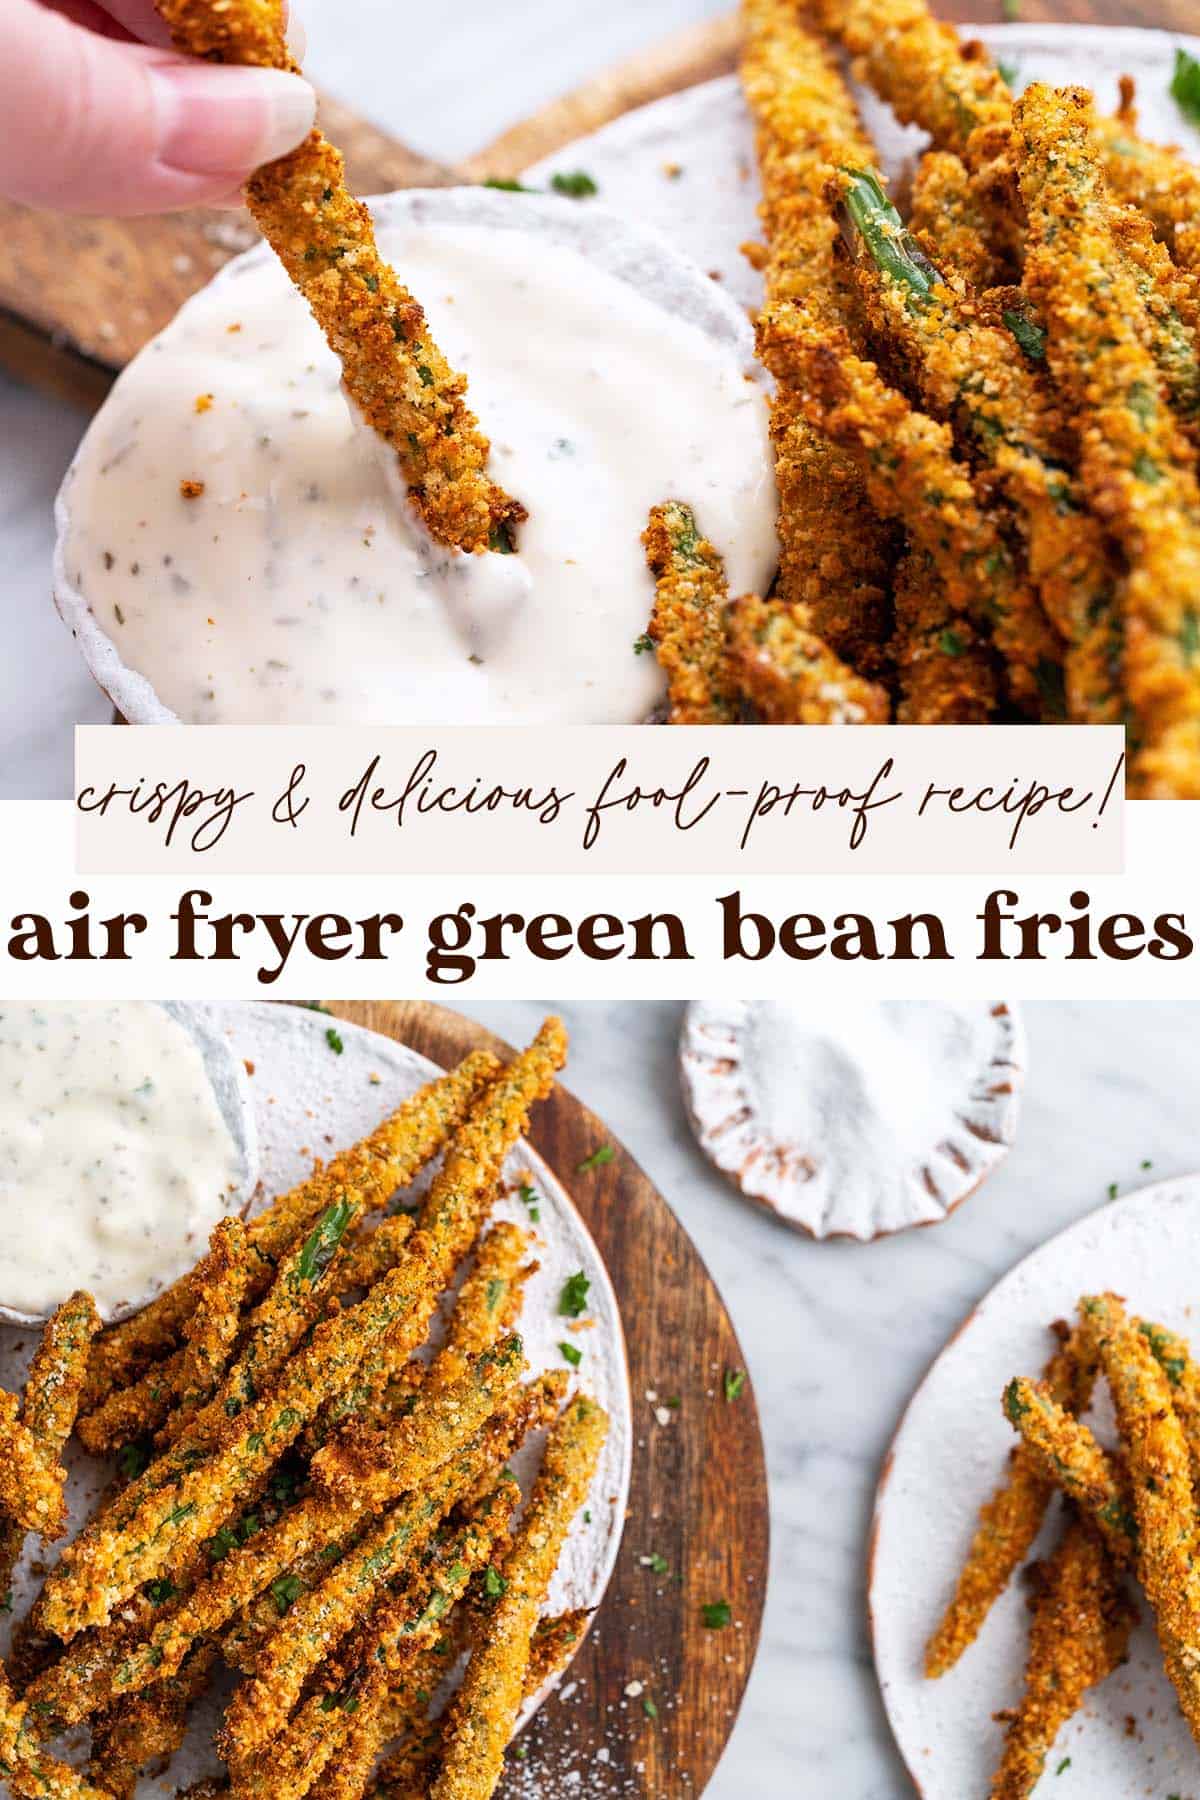 air fryer green bean fries recipe pin